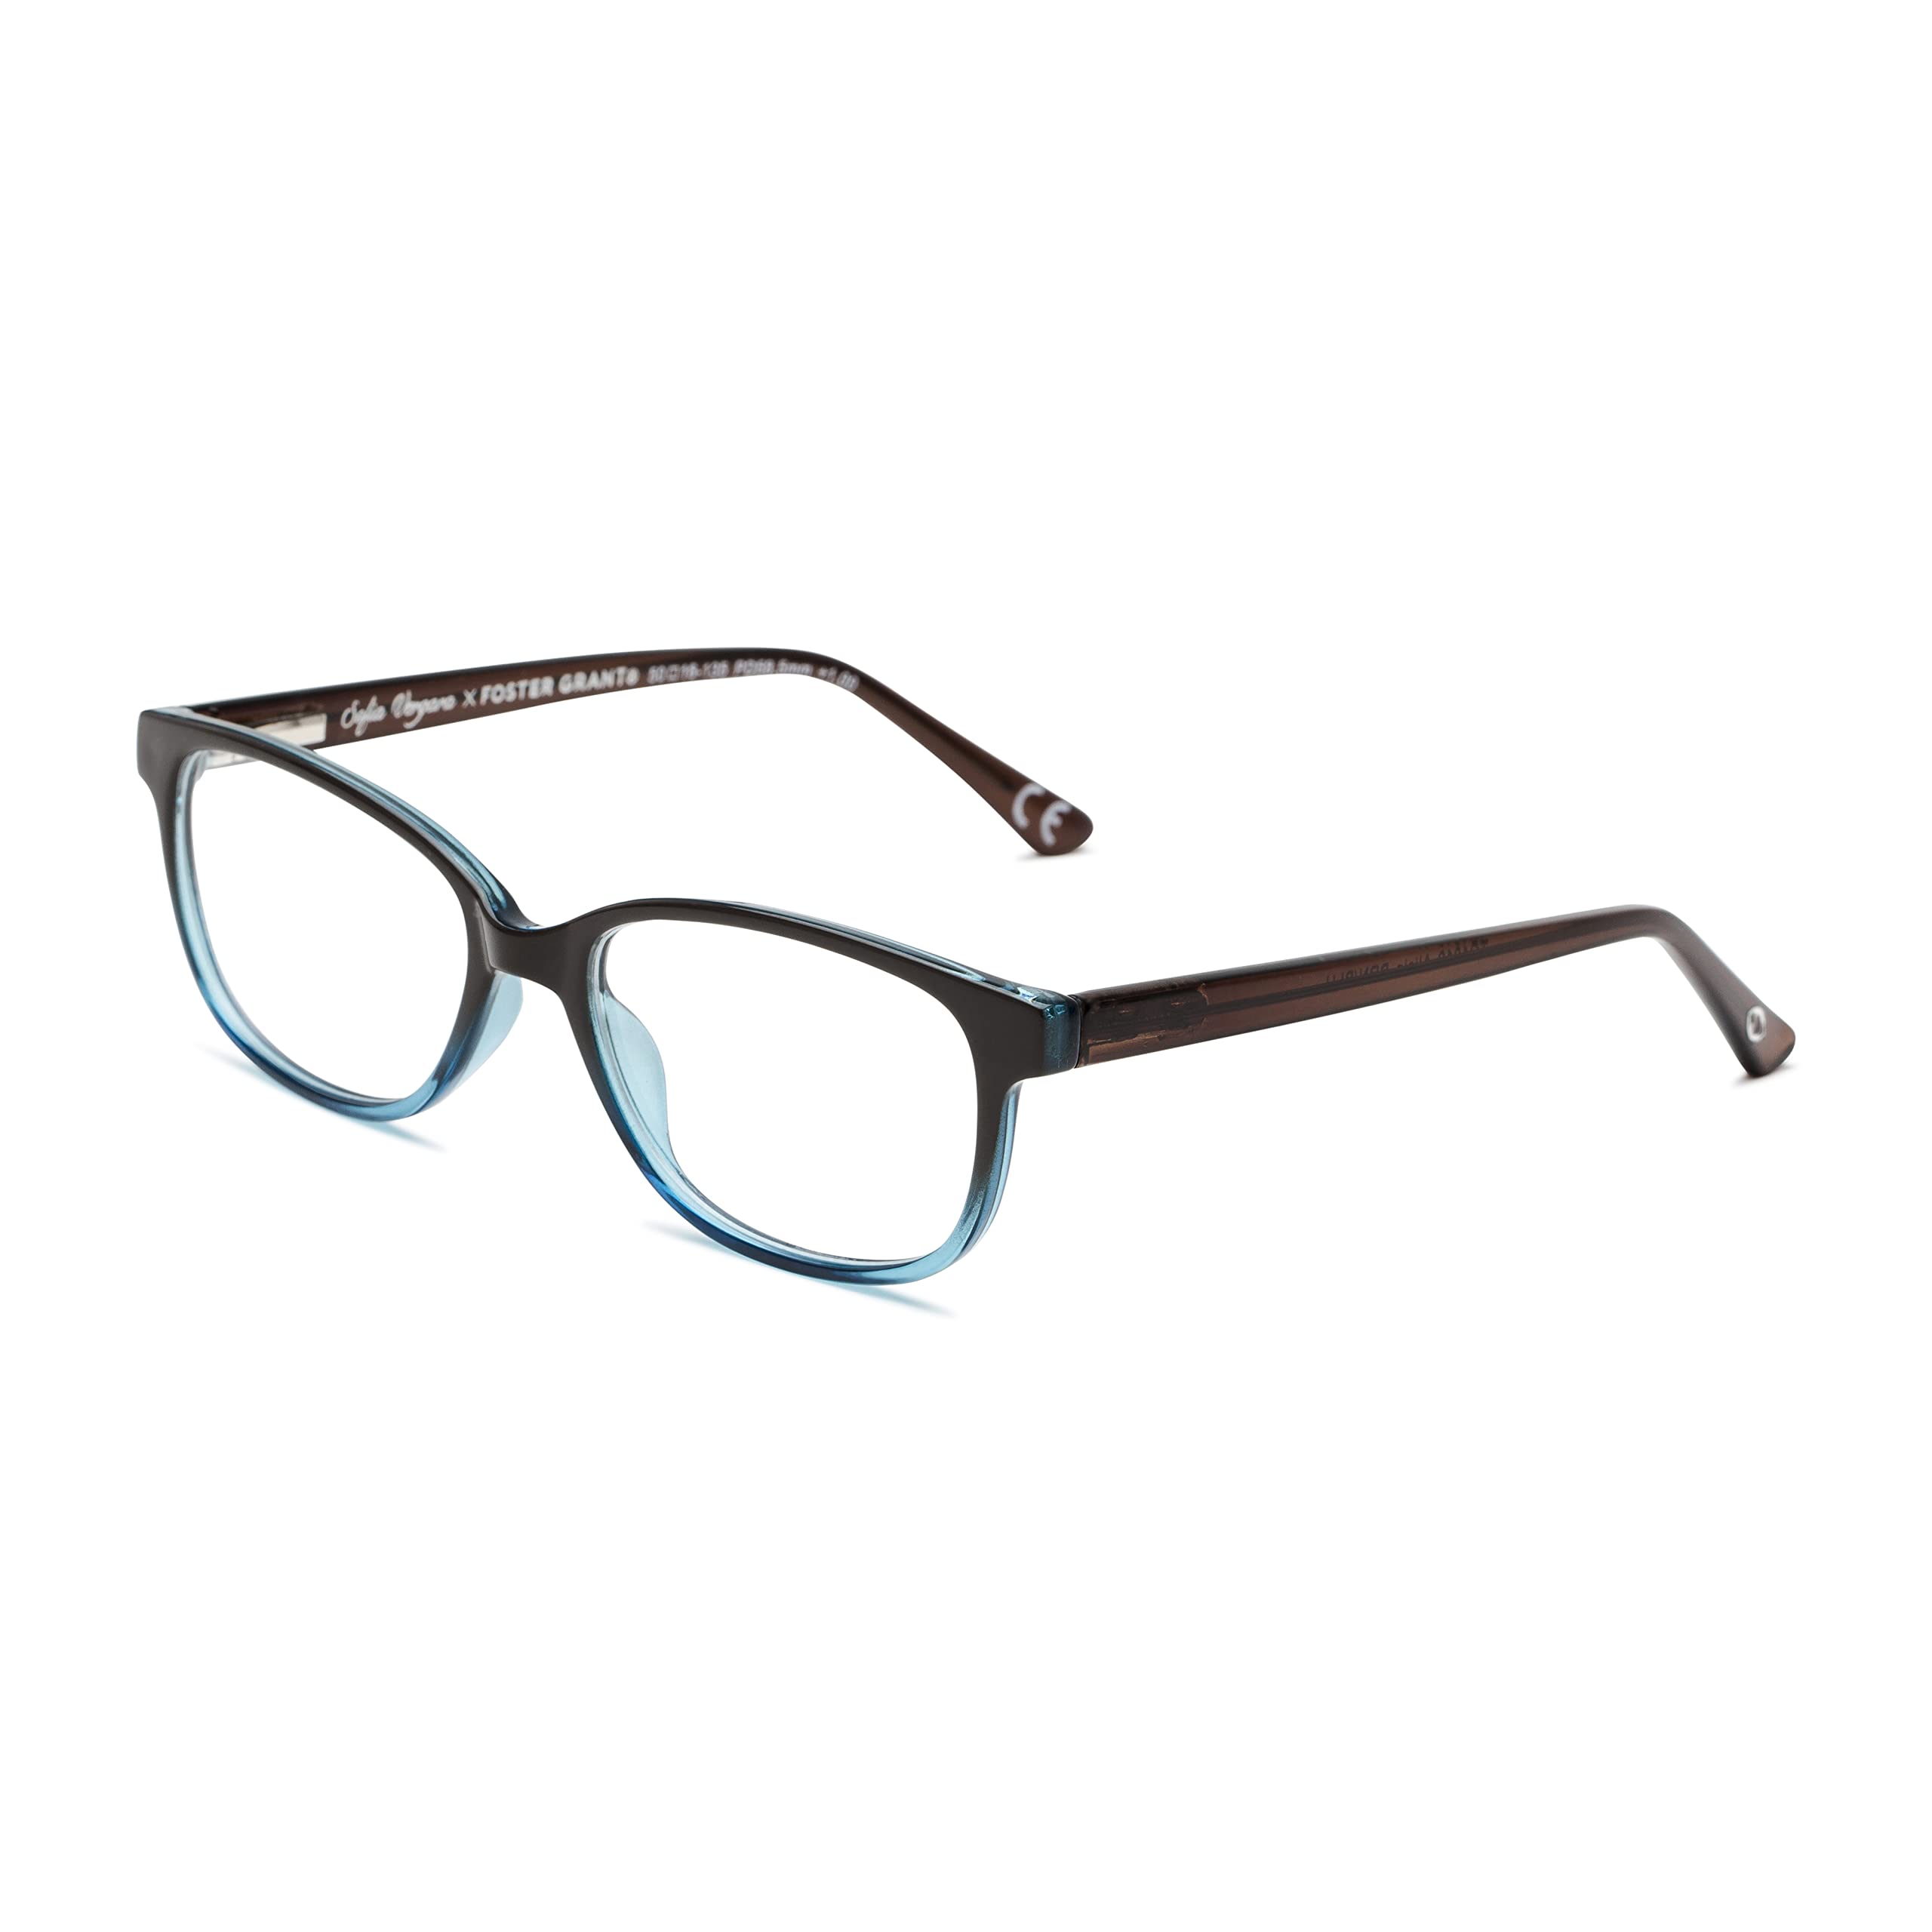 Sofia Vergara x Foster Grant Alicia Blue Light Multi Focus Reading Glasses  Rectangular Brown and Blue